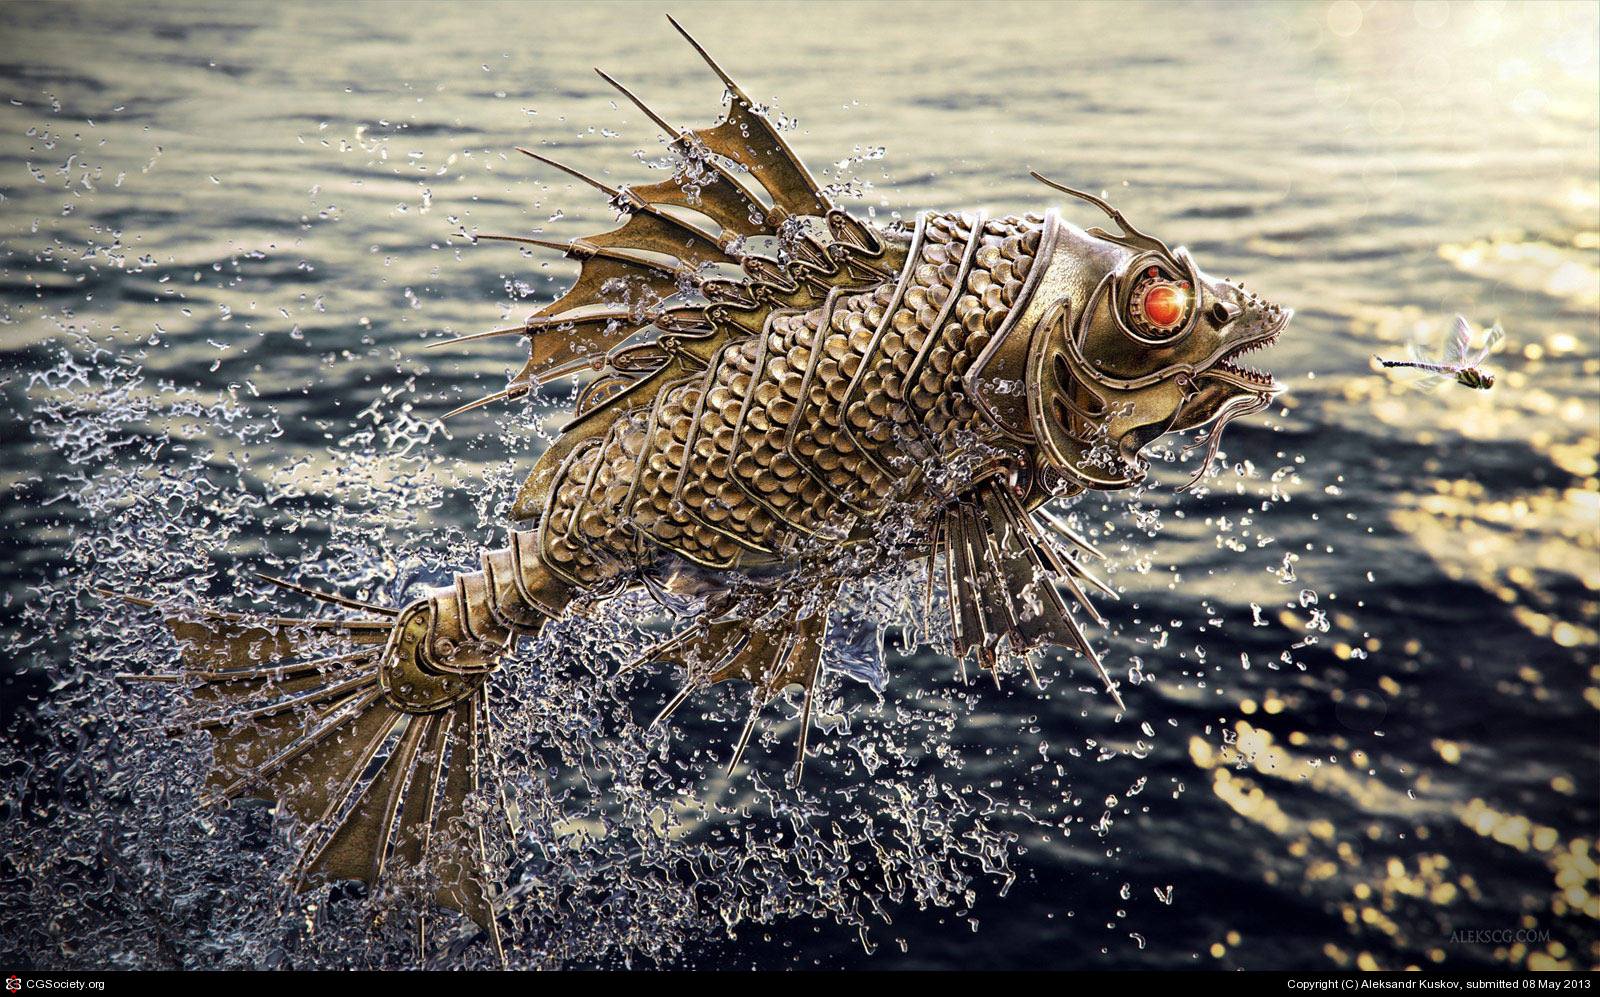 d maya mentalray photoshop gold fish aleksandr kuskov